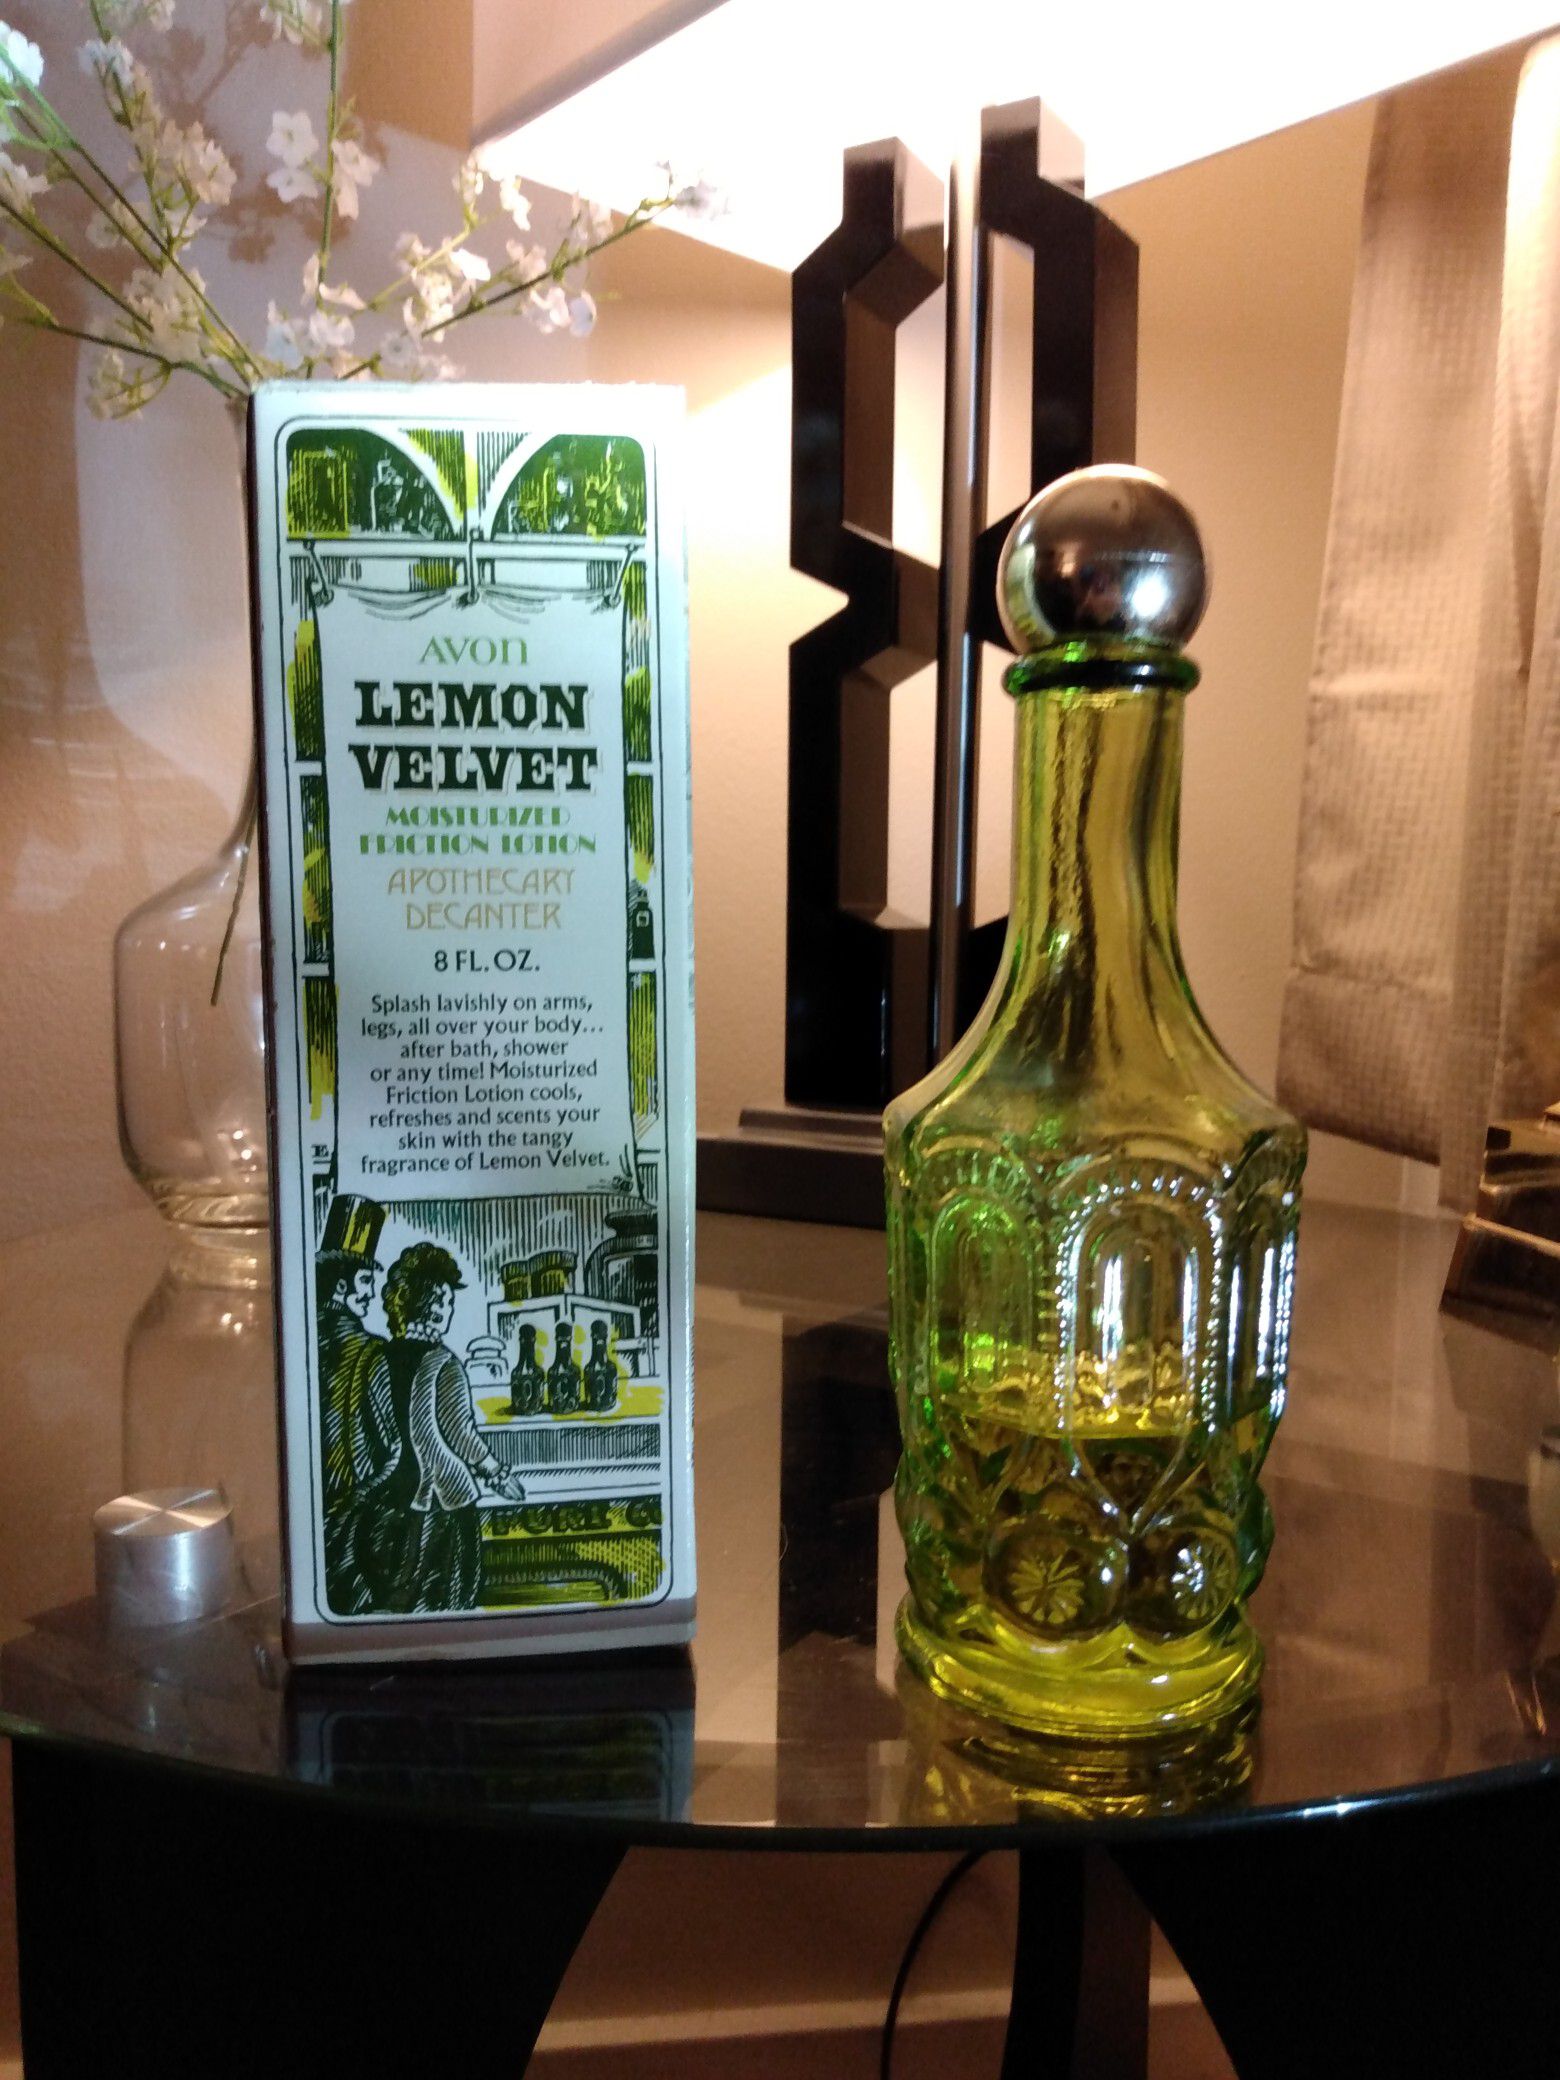 Vintage Avon Lemon Velvet Apothecary Bottle - Moisturizing Friction Lotion - green glass, gold plastic lid, decanter, collectible, box